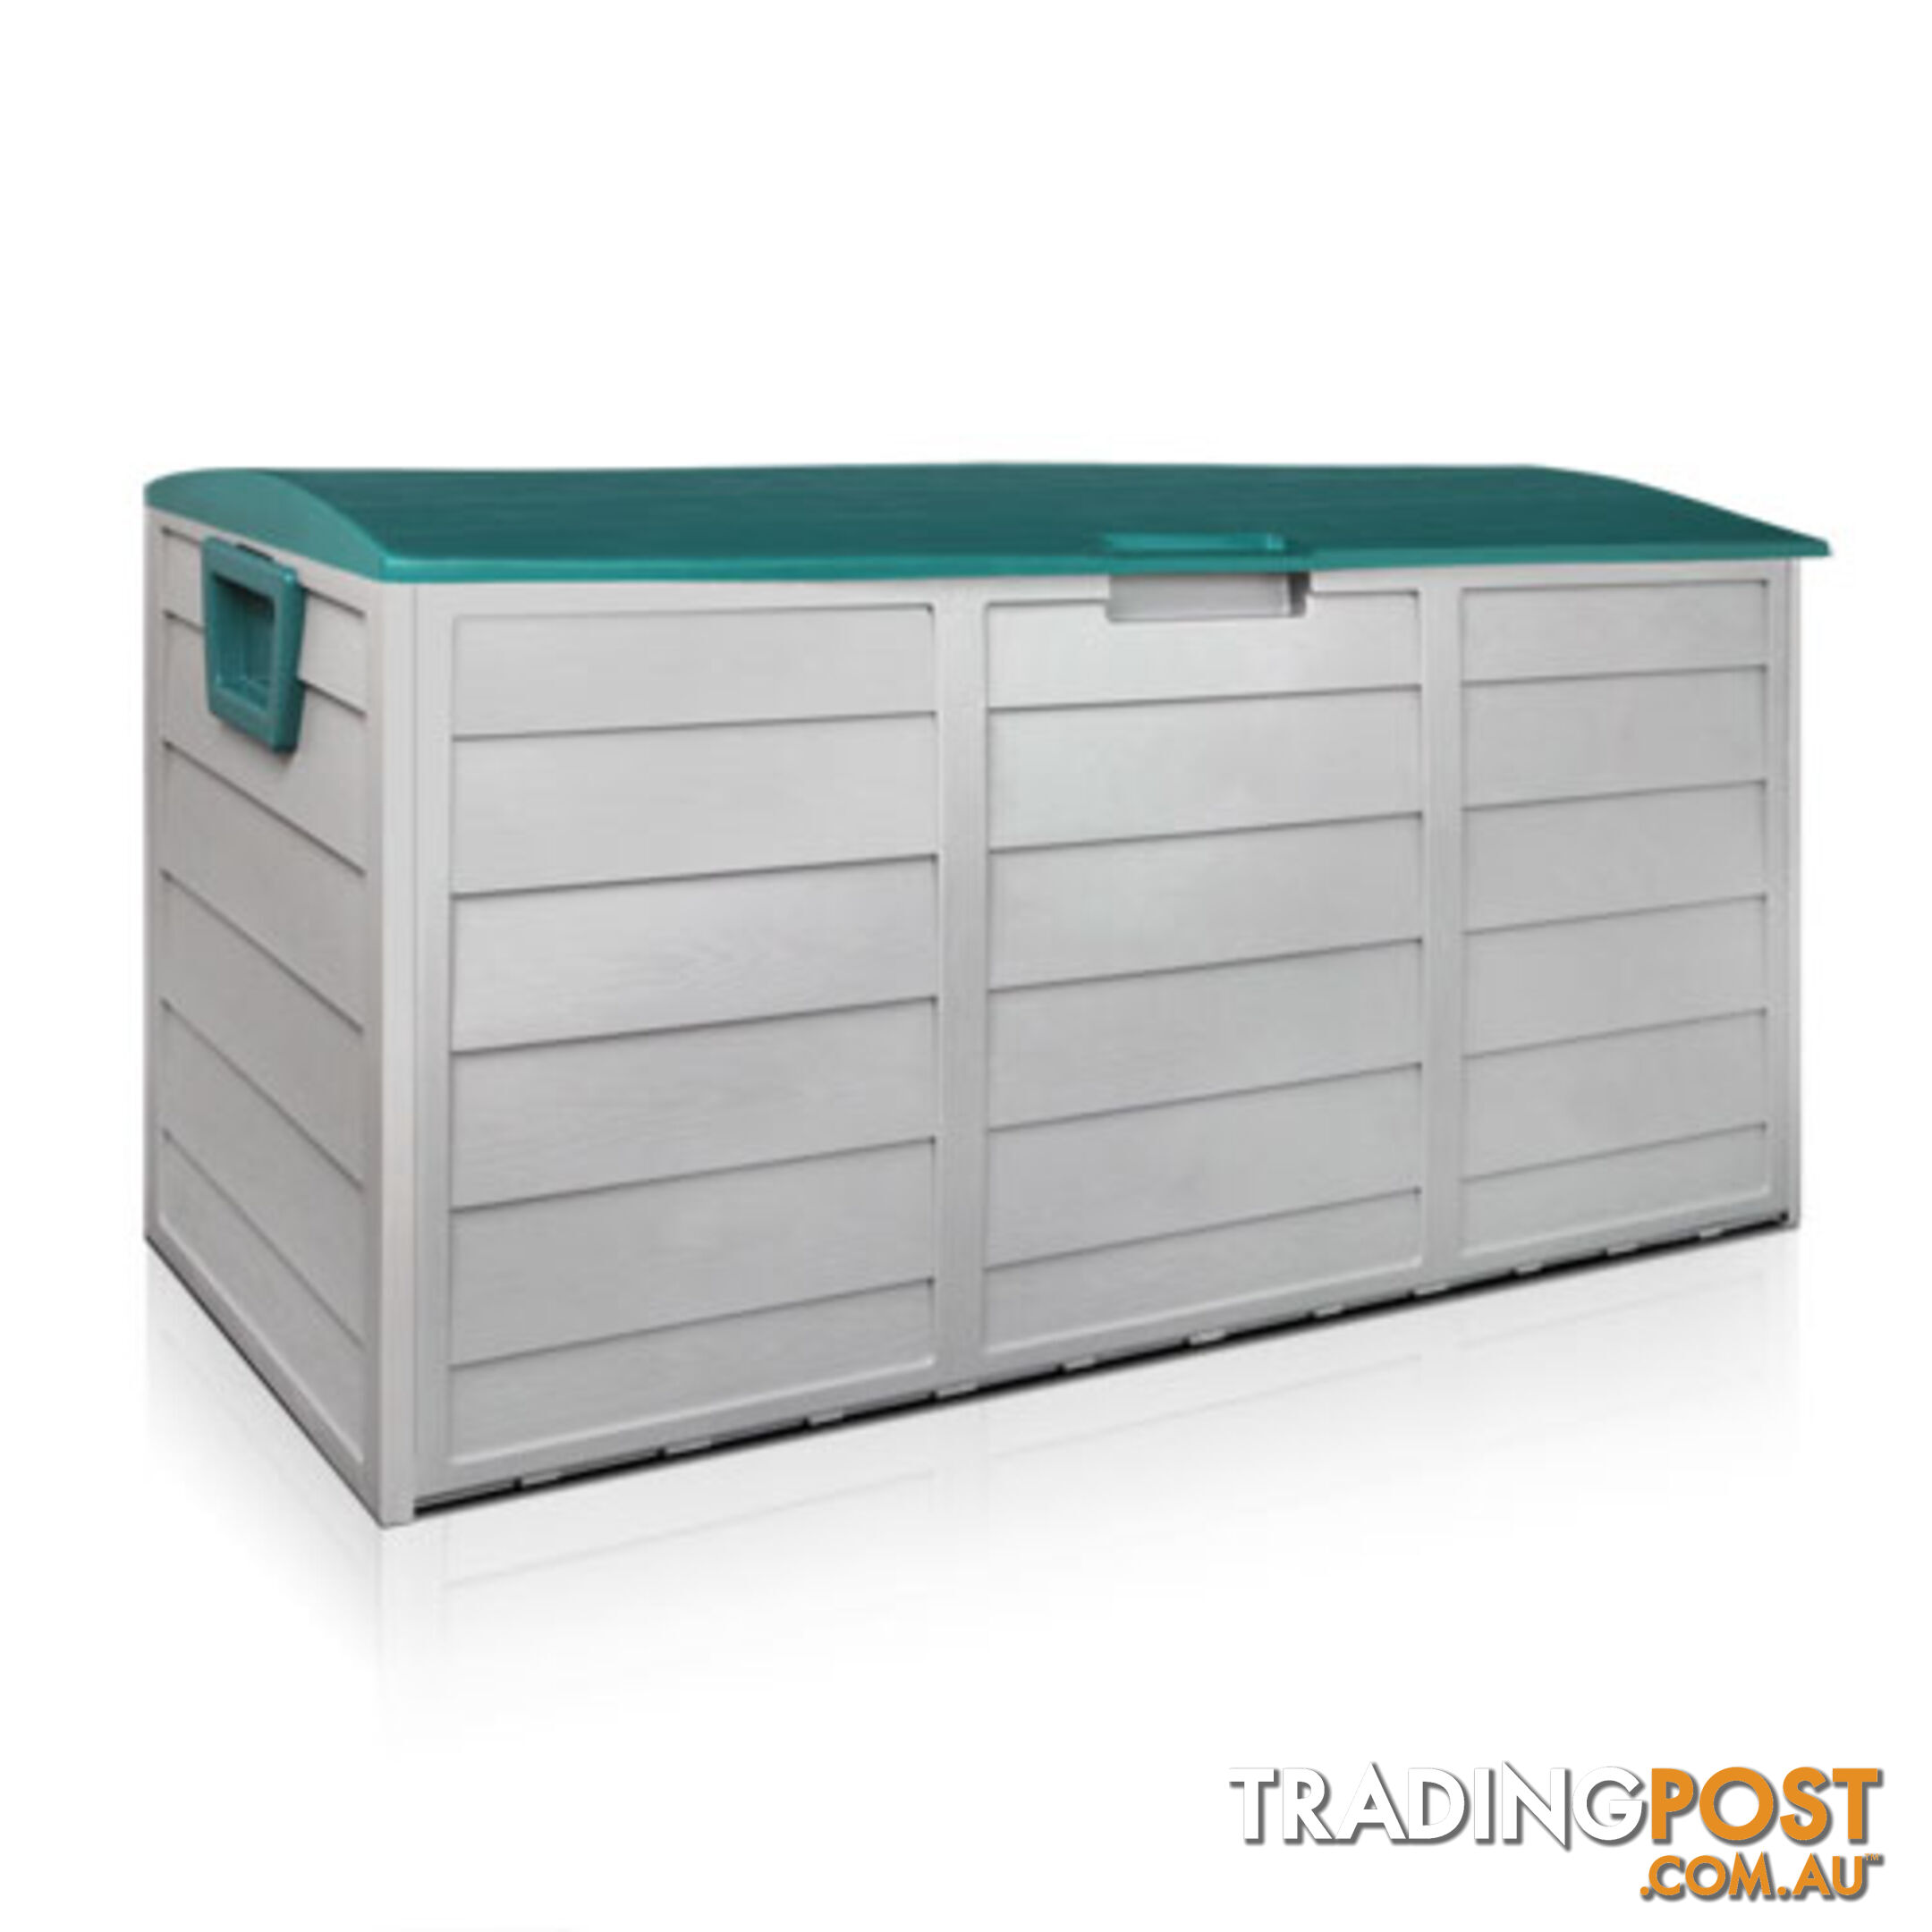 290L Plastic Outdoor Storage Box Container Weatherproof Grey Green